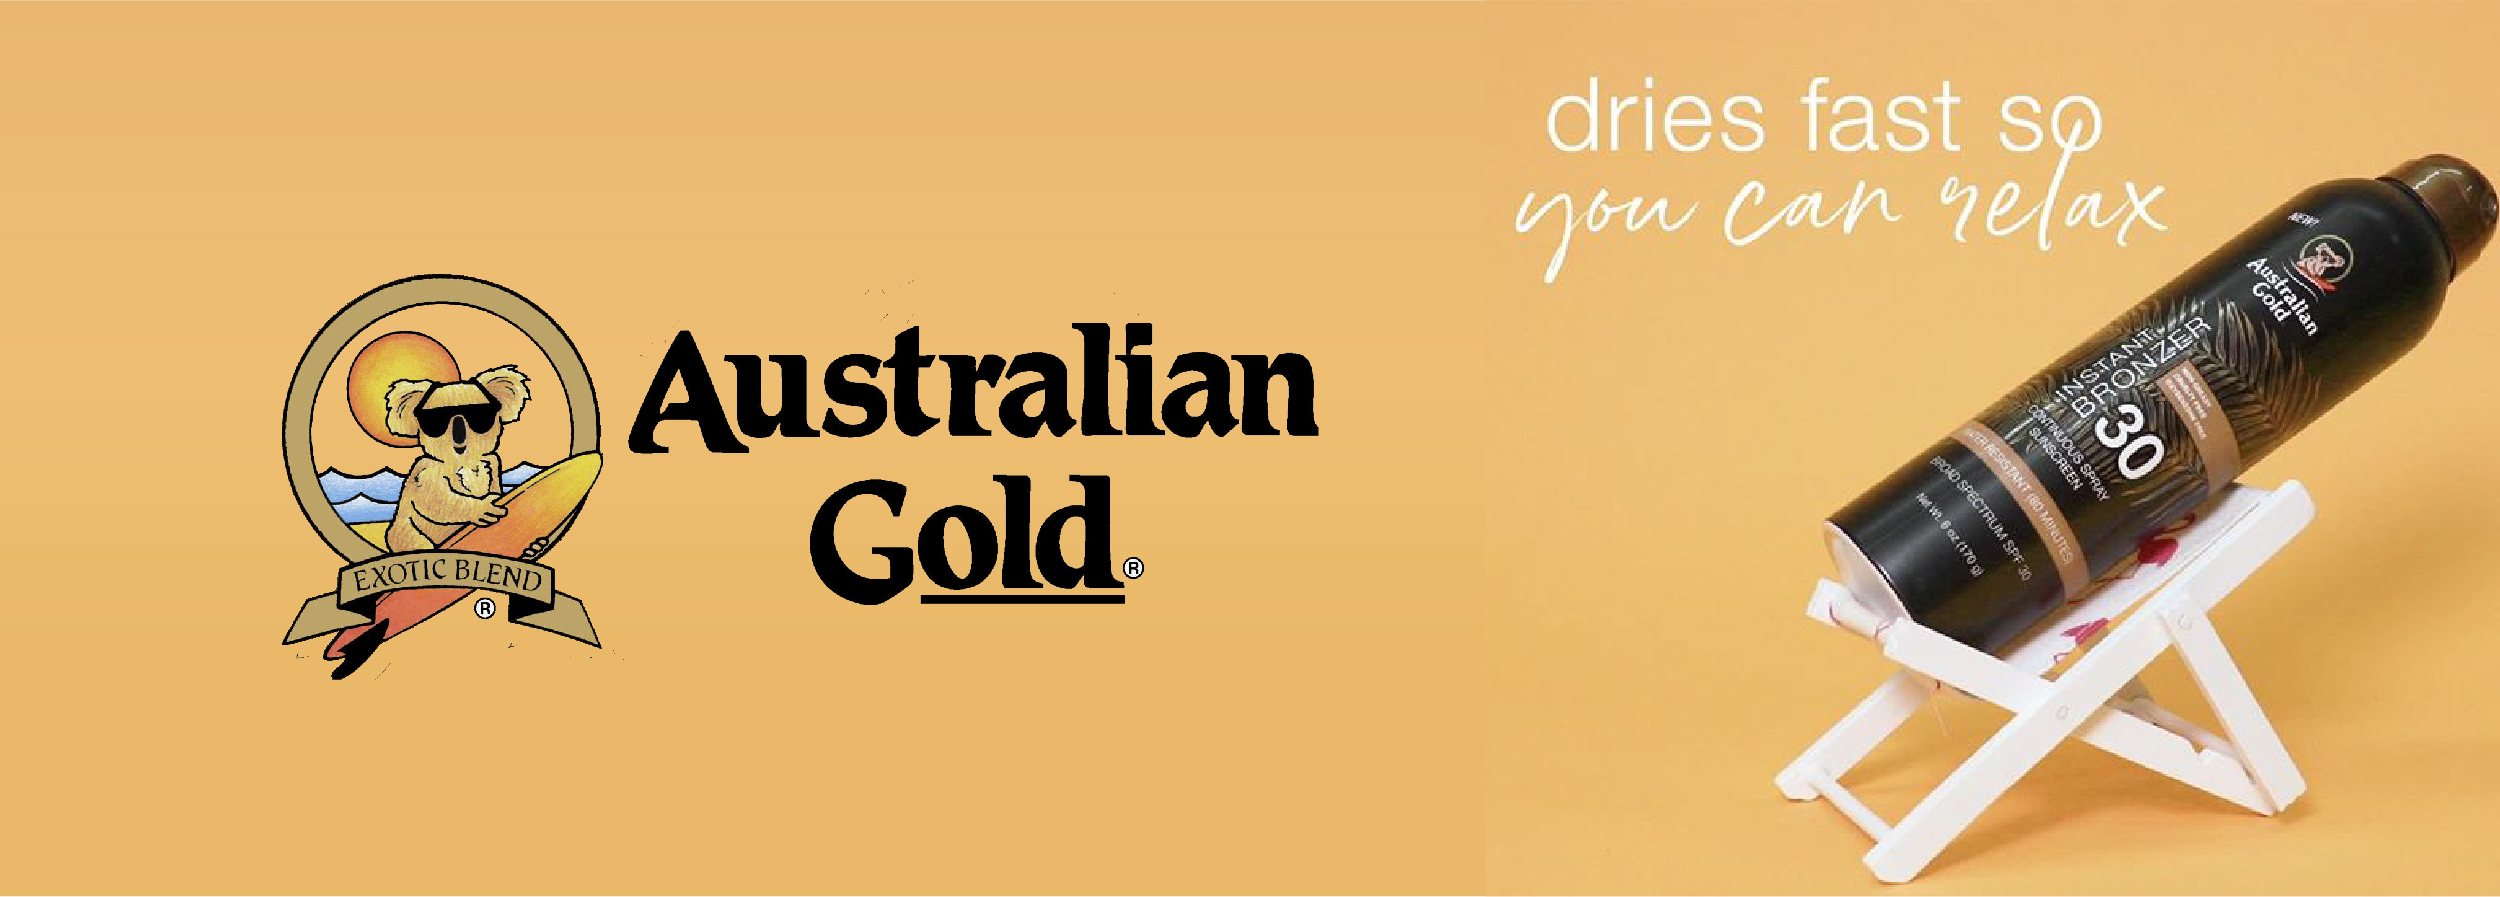 Australian Gold-01